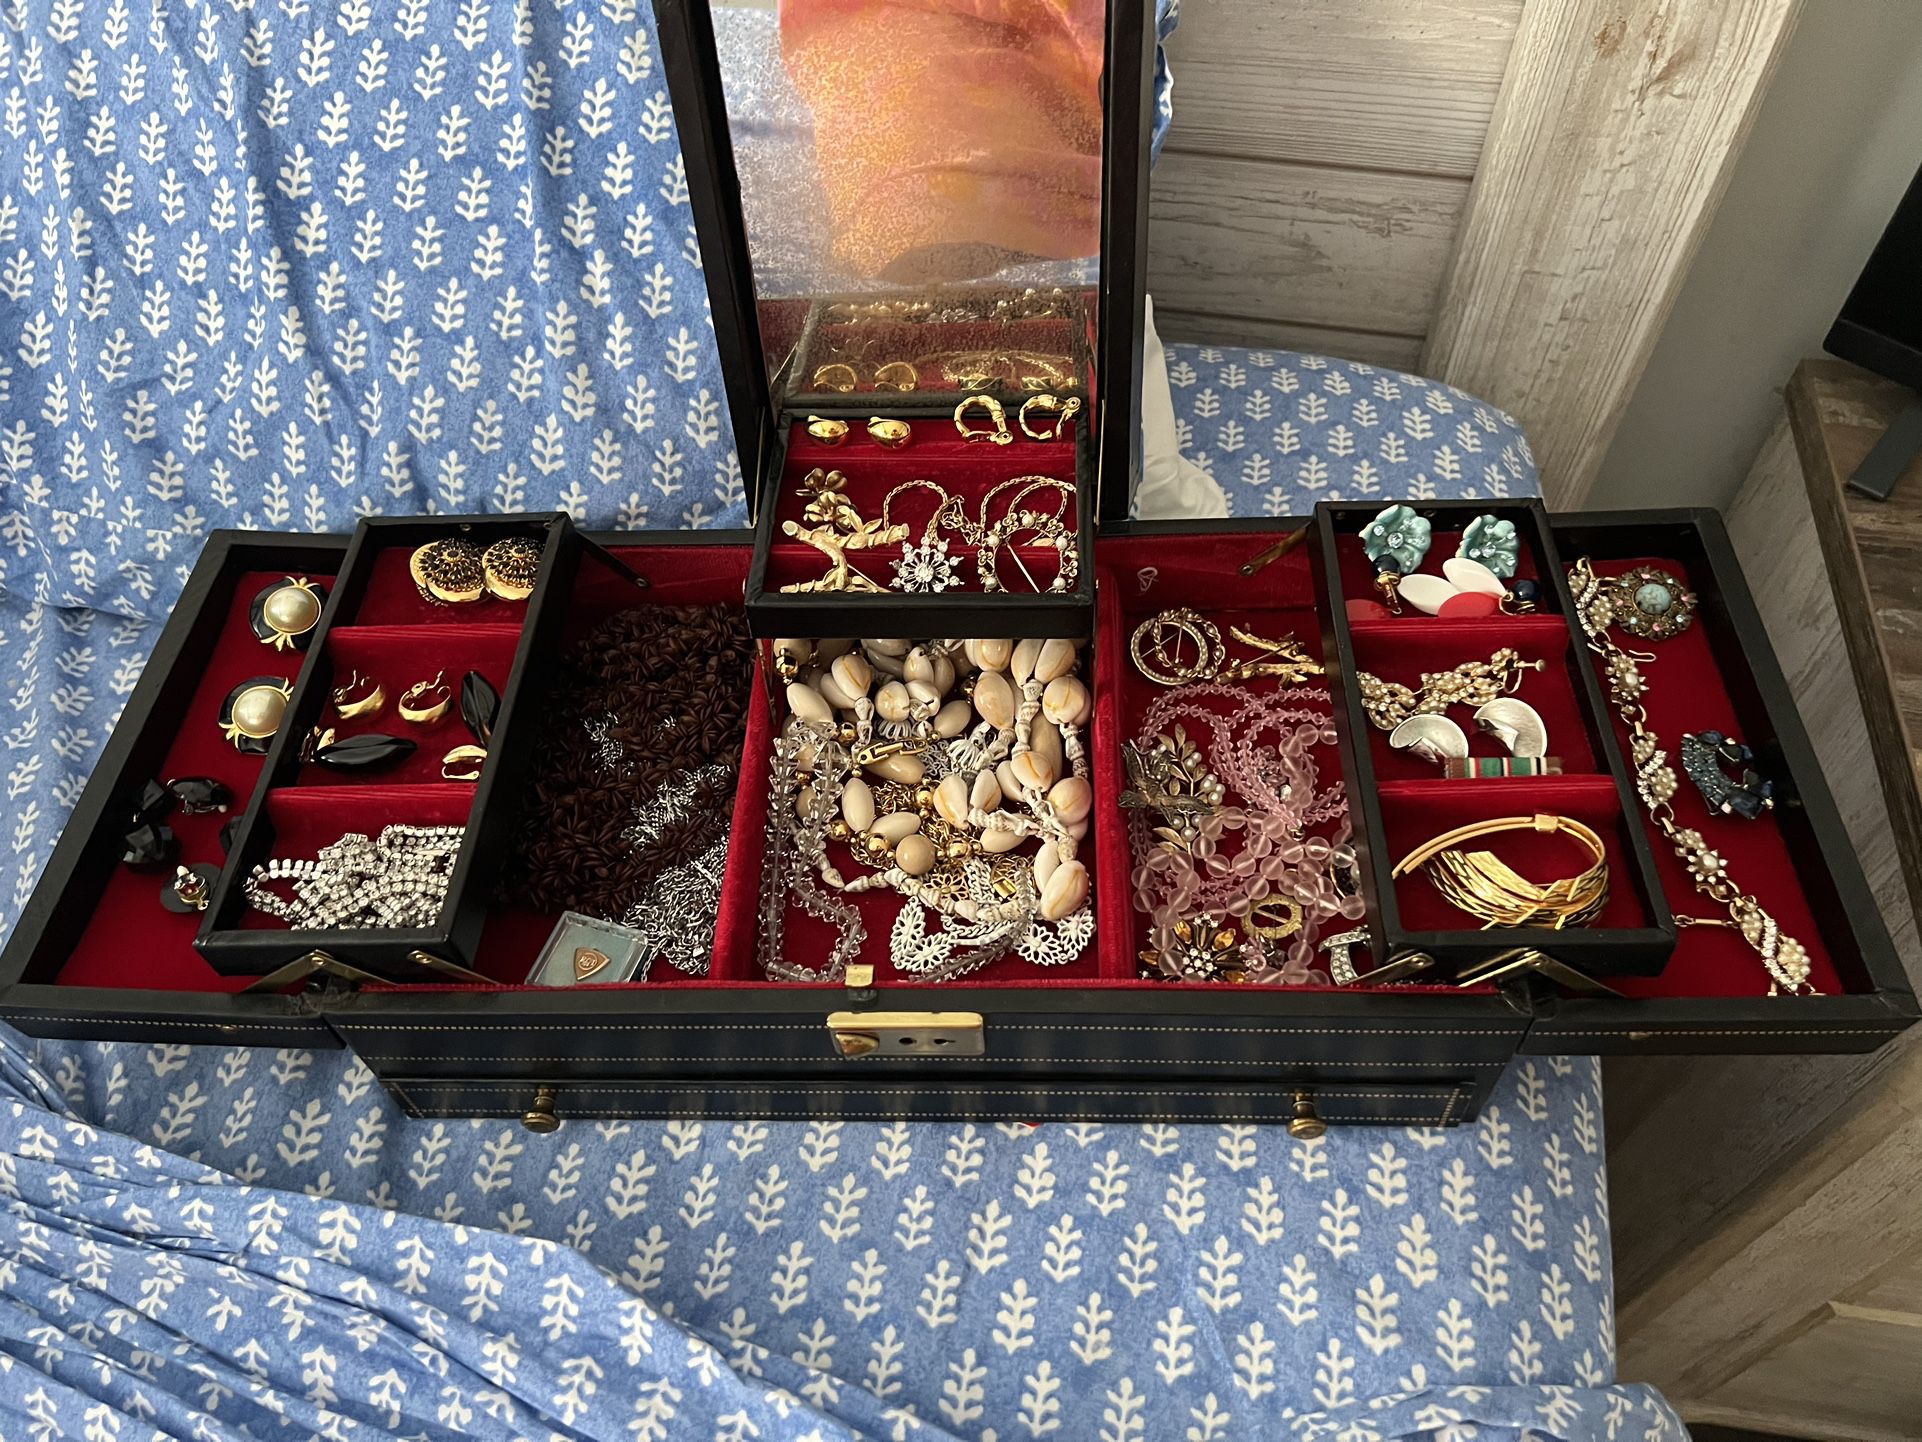 Lot Of Vintage Jewelry 